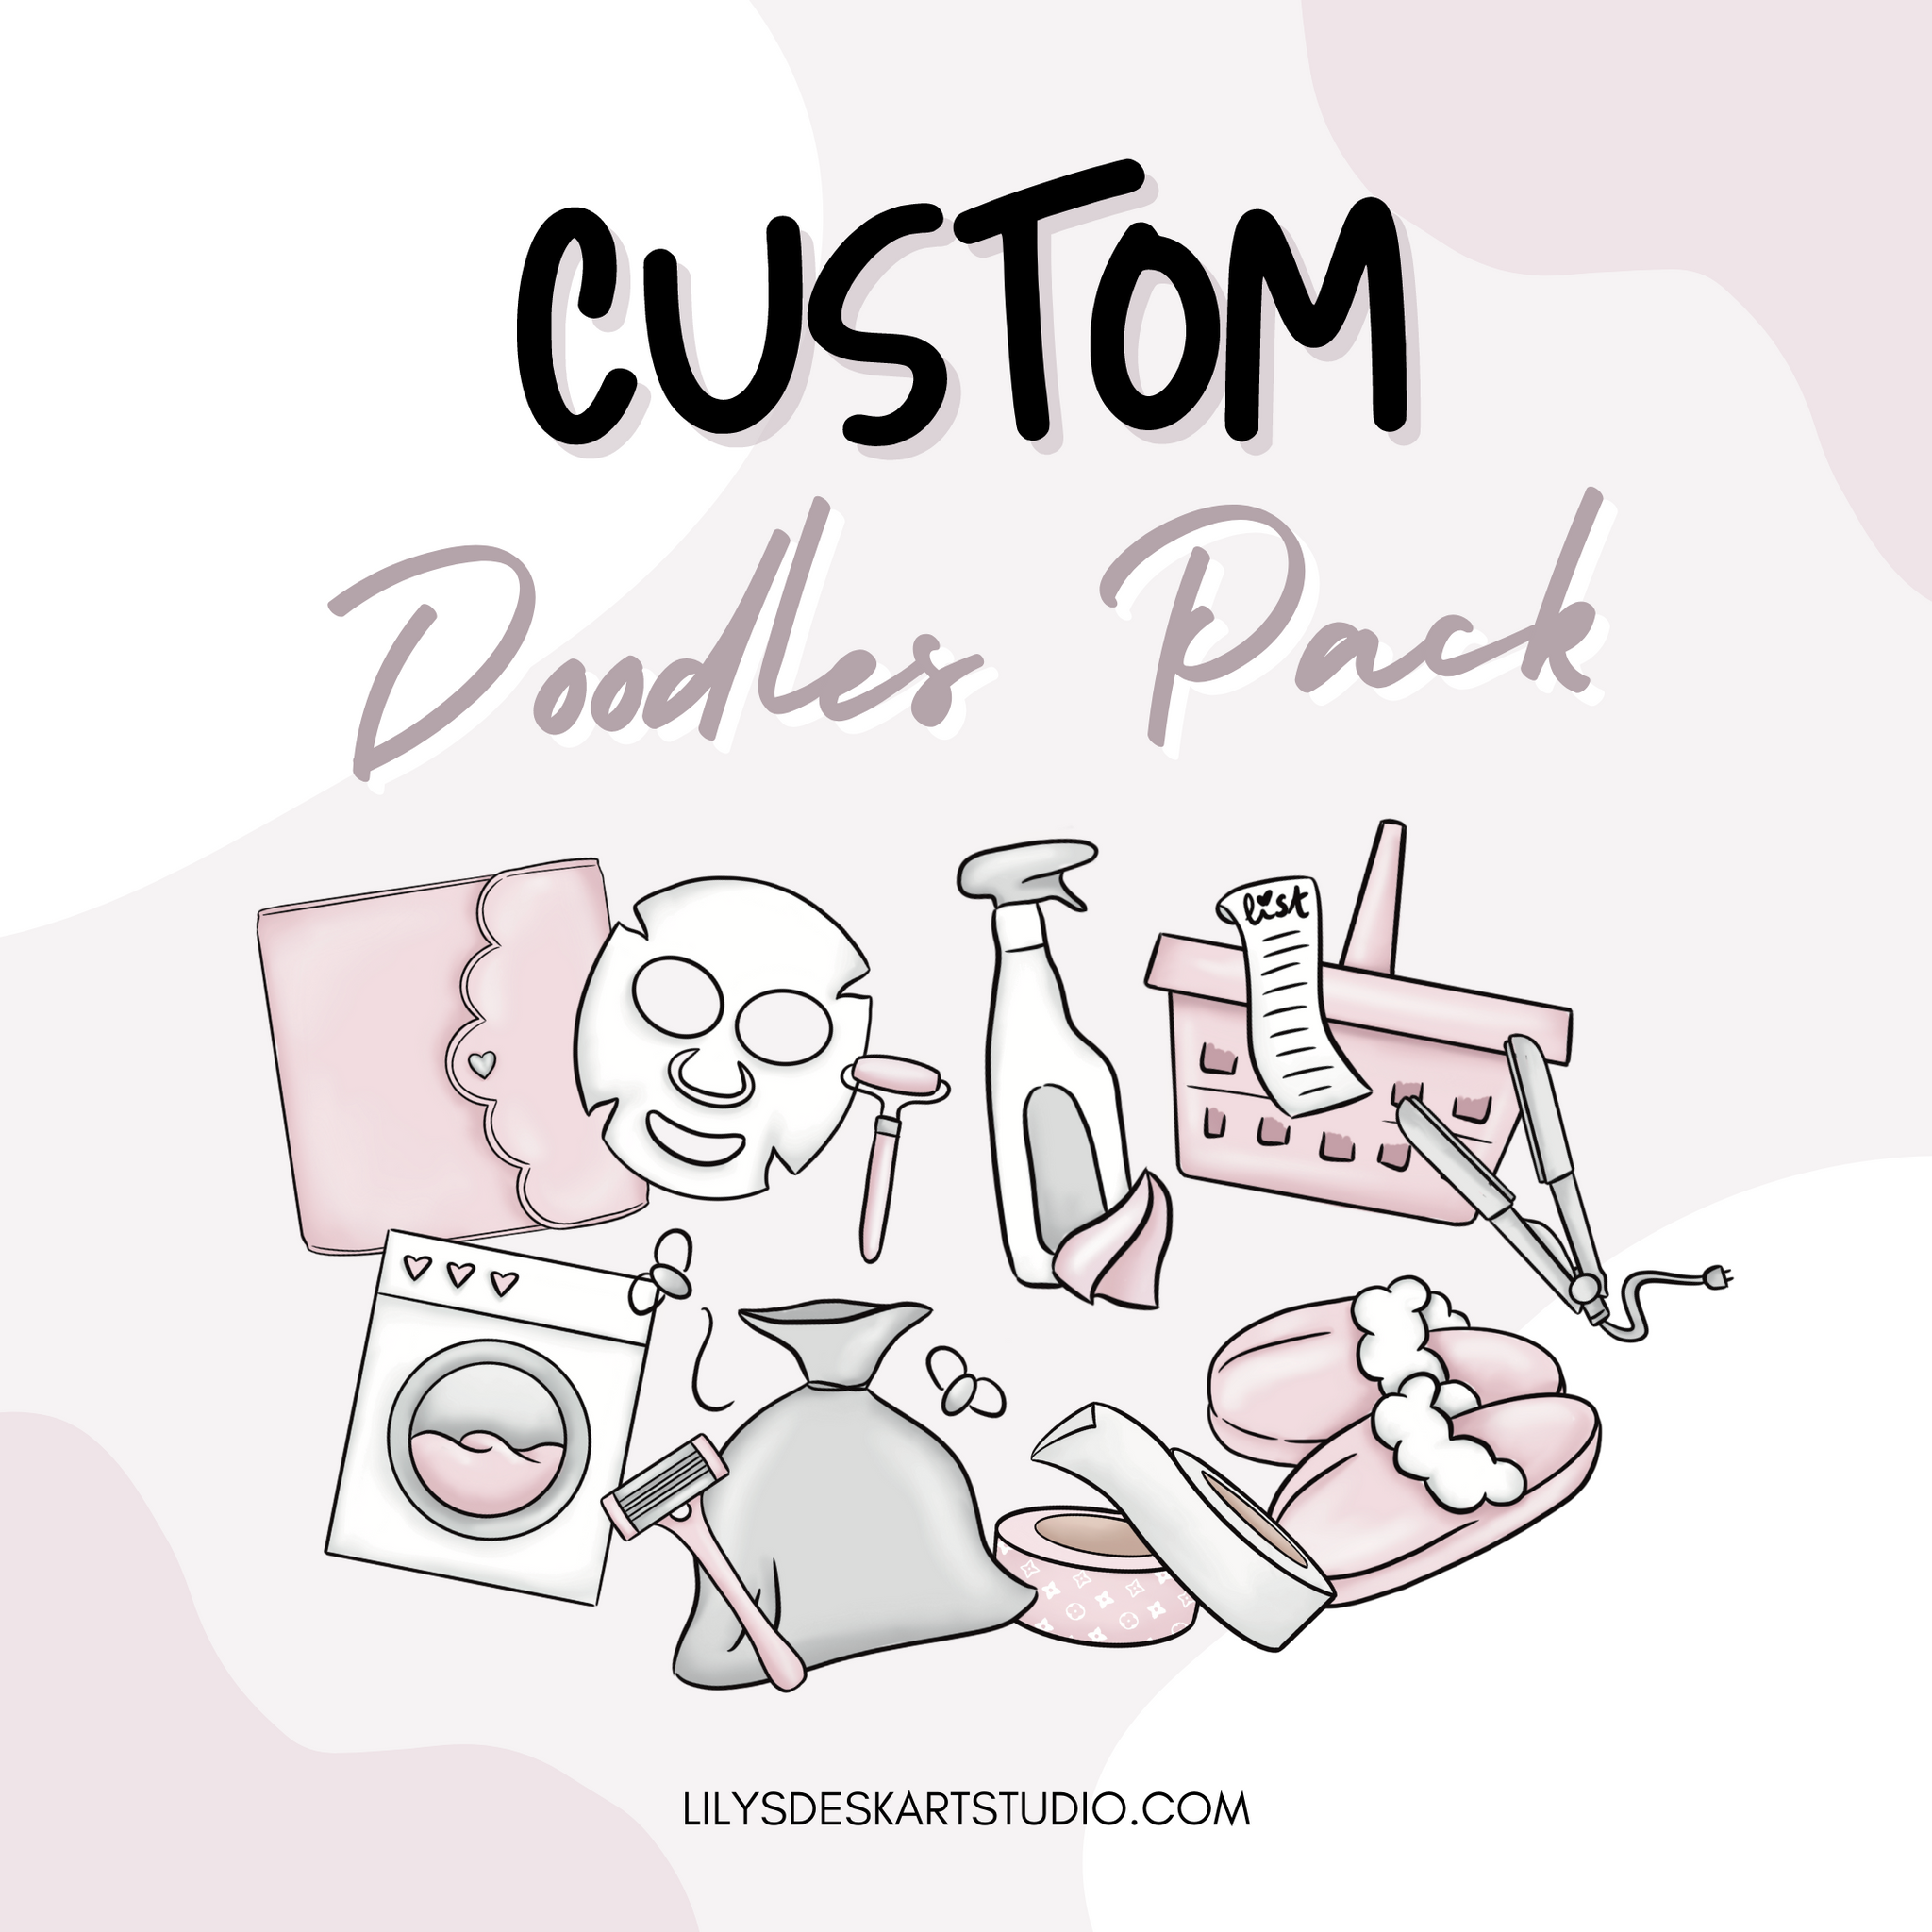 Custom Doodles Pack